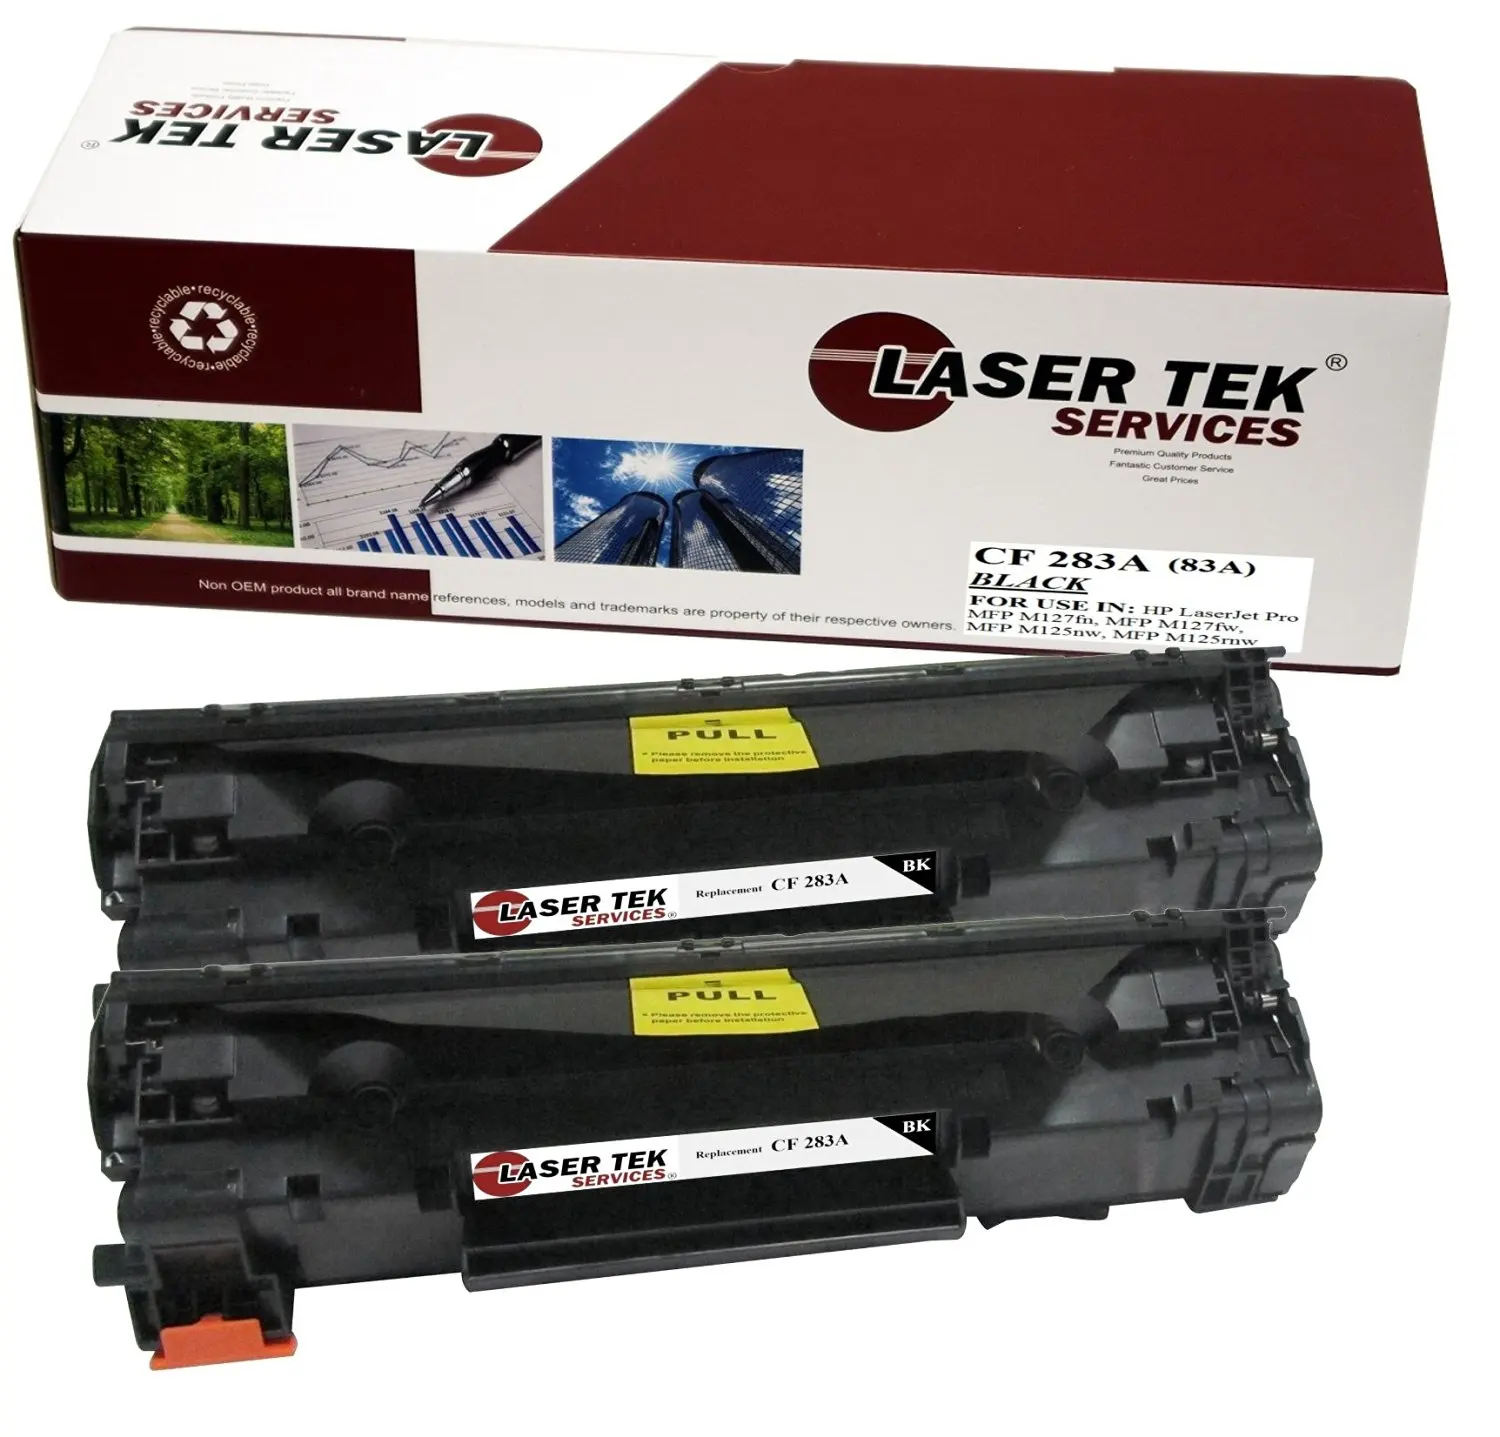 Buy 4 Pk Selectec For Hp Cf283a 83a Toners Cartridge For Use With Hp Laserjet Pro Mfp M127fn Laserjet Pro Mfp M127fw Laserjet Pro Mfp M125nw Laserjet Pro Mfp M125rnw 1 500